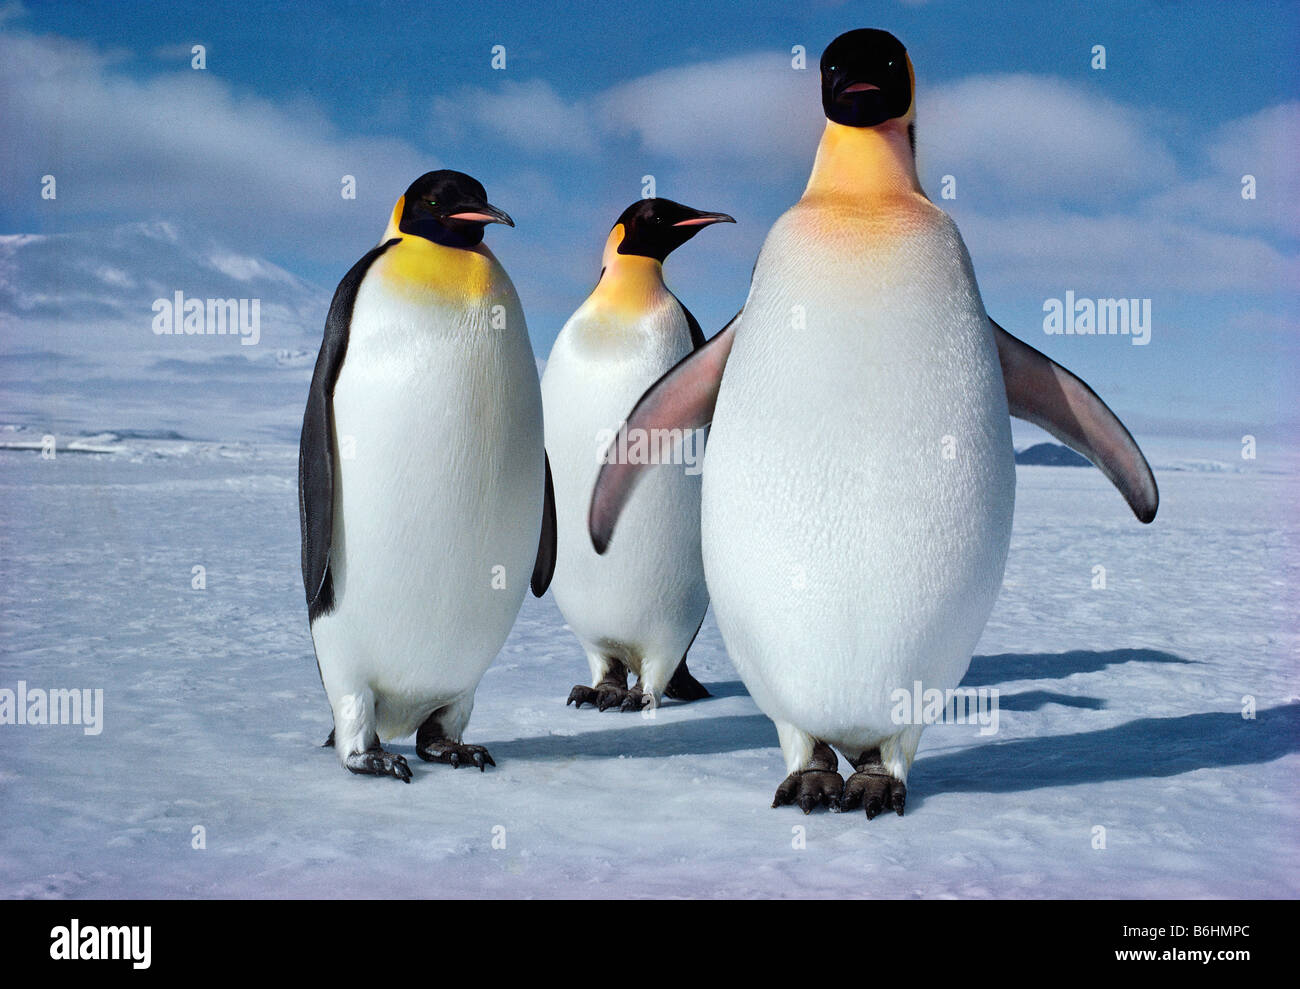 Aptenodytes forsteri, Pinguini imperatore farciti con gamberetti, Ross Ice Shelf, Antartide, emisfero meridionale Foto Stock